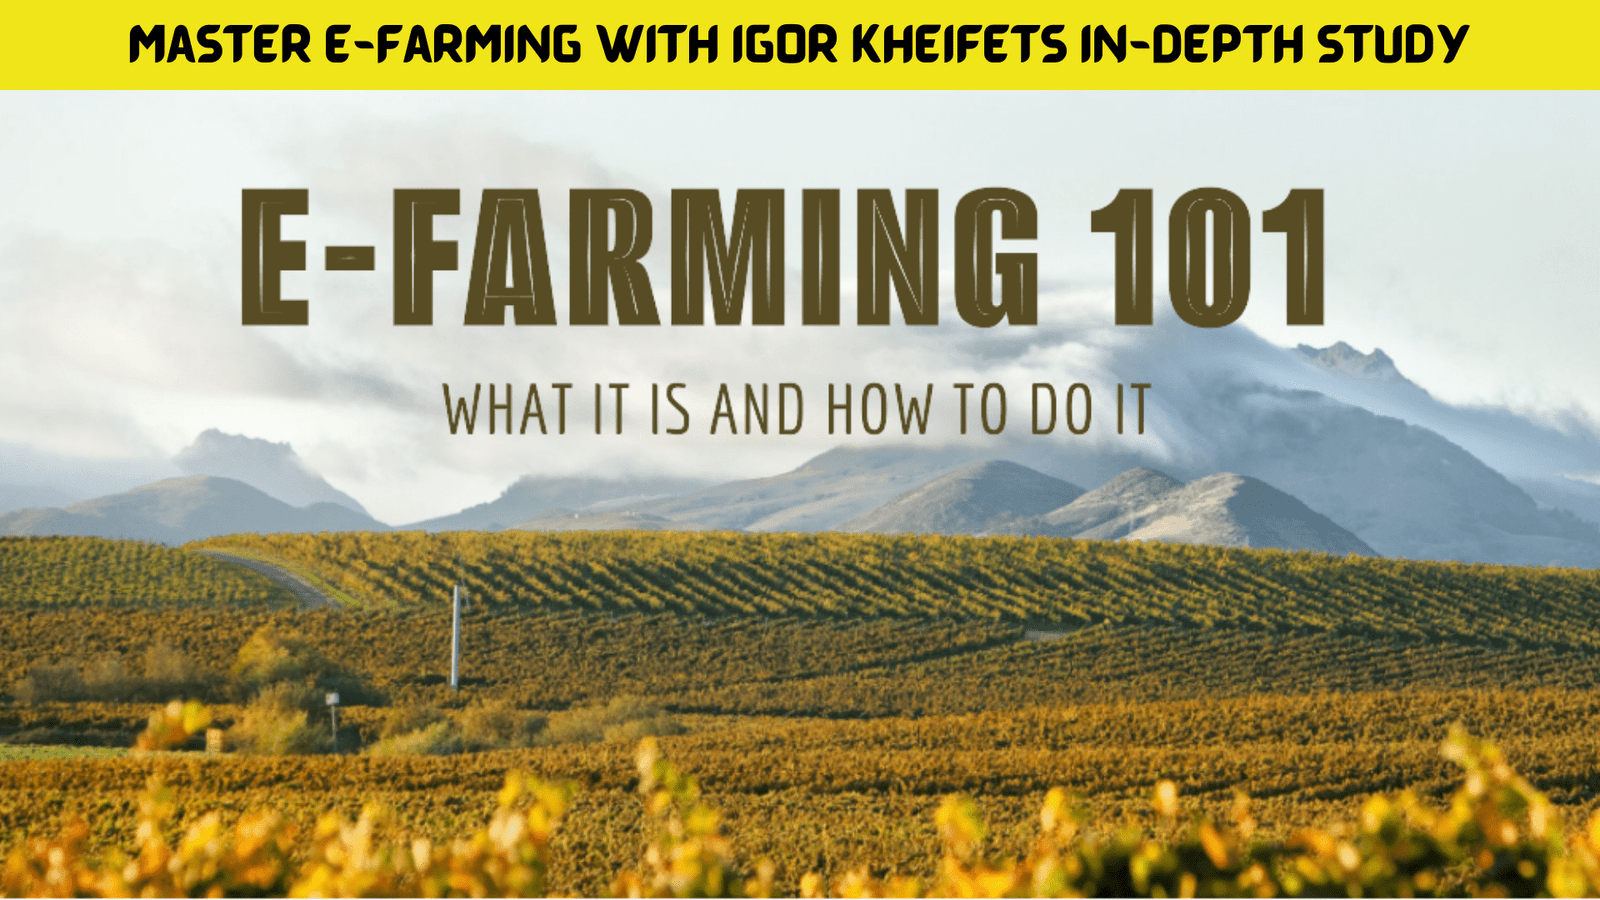 Master E-Farming with Igor Kheifets In-Depth Study